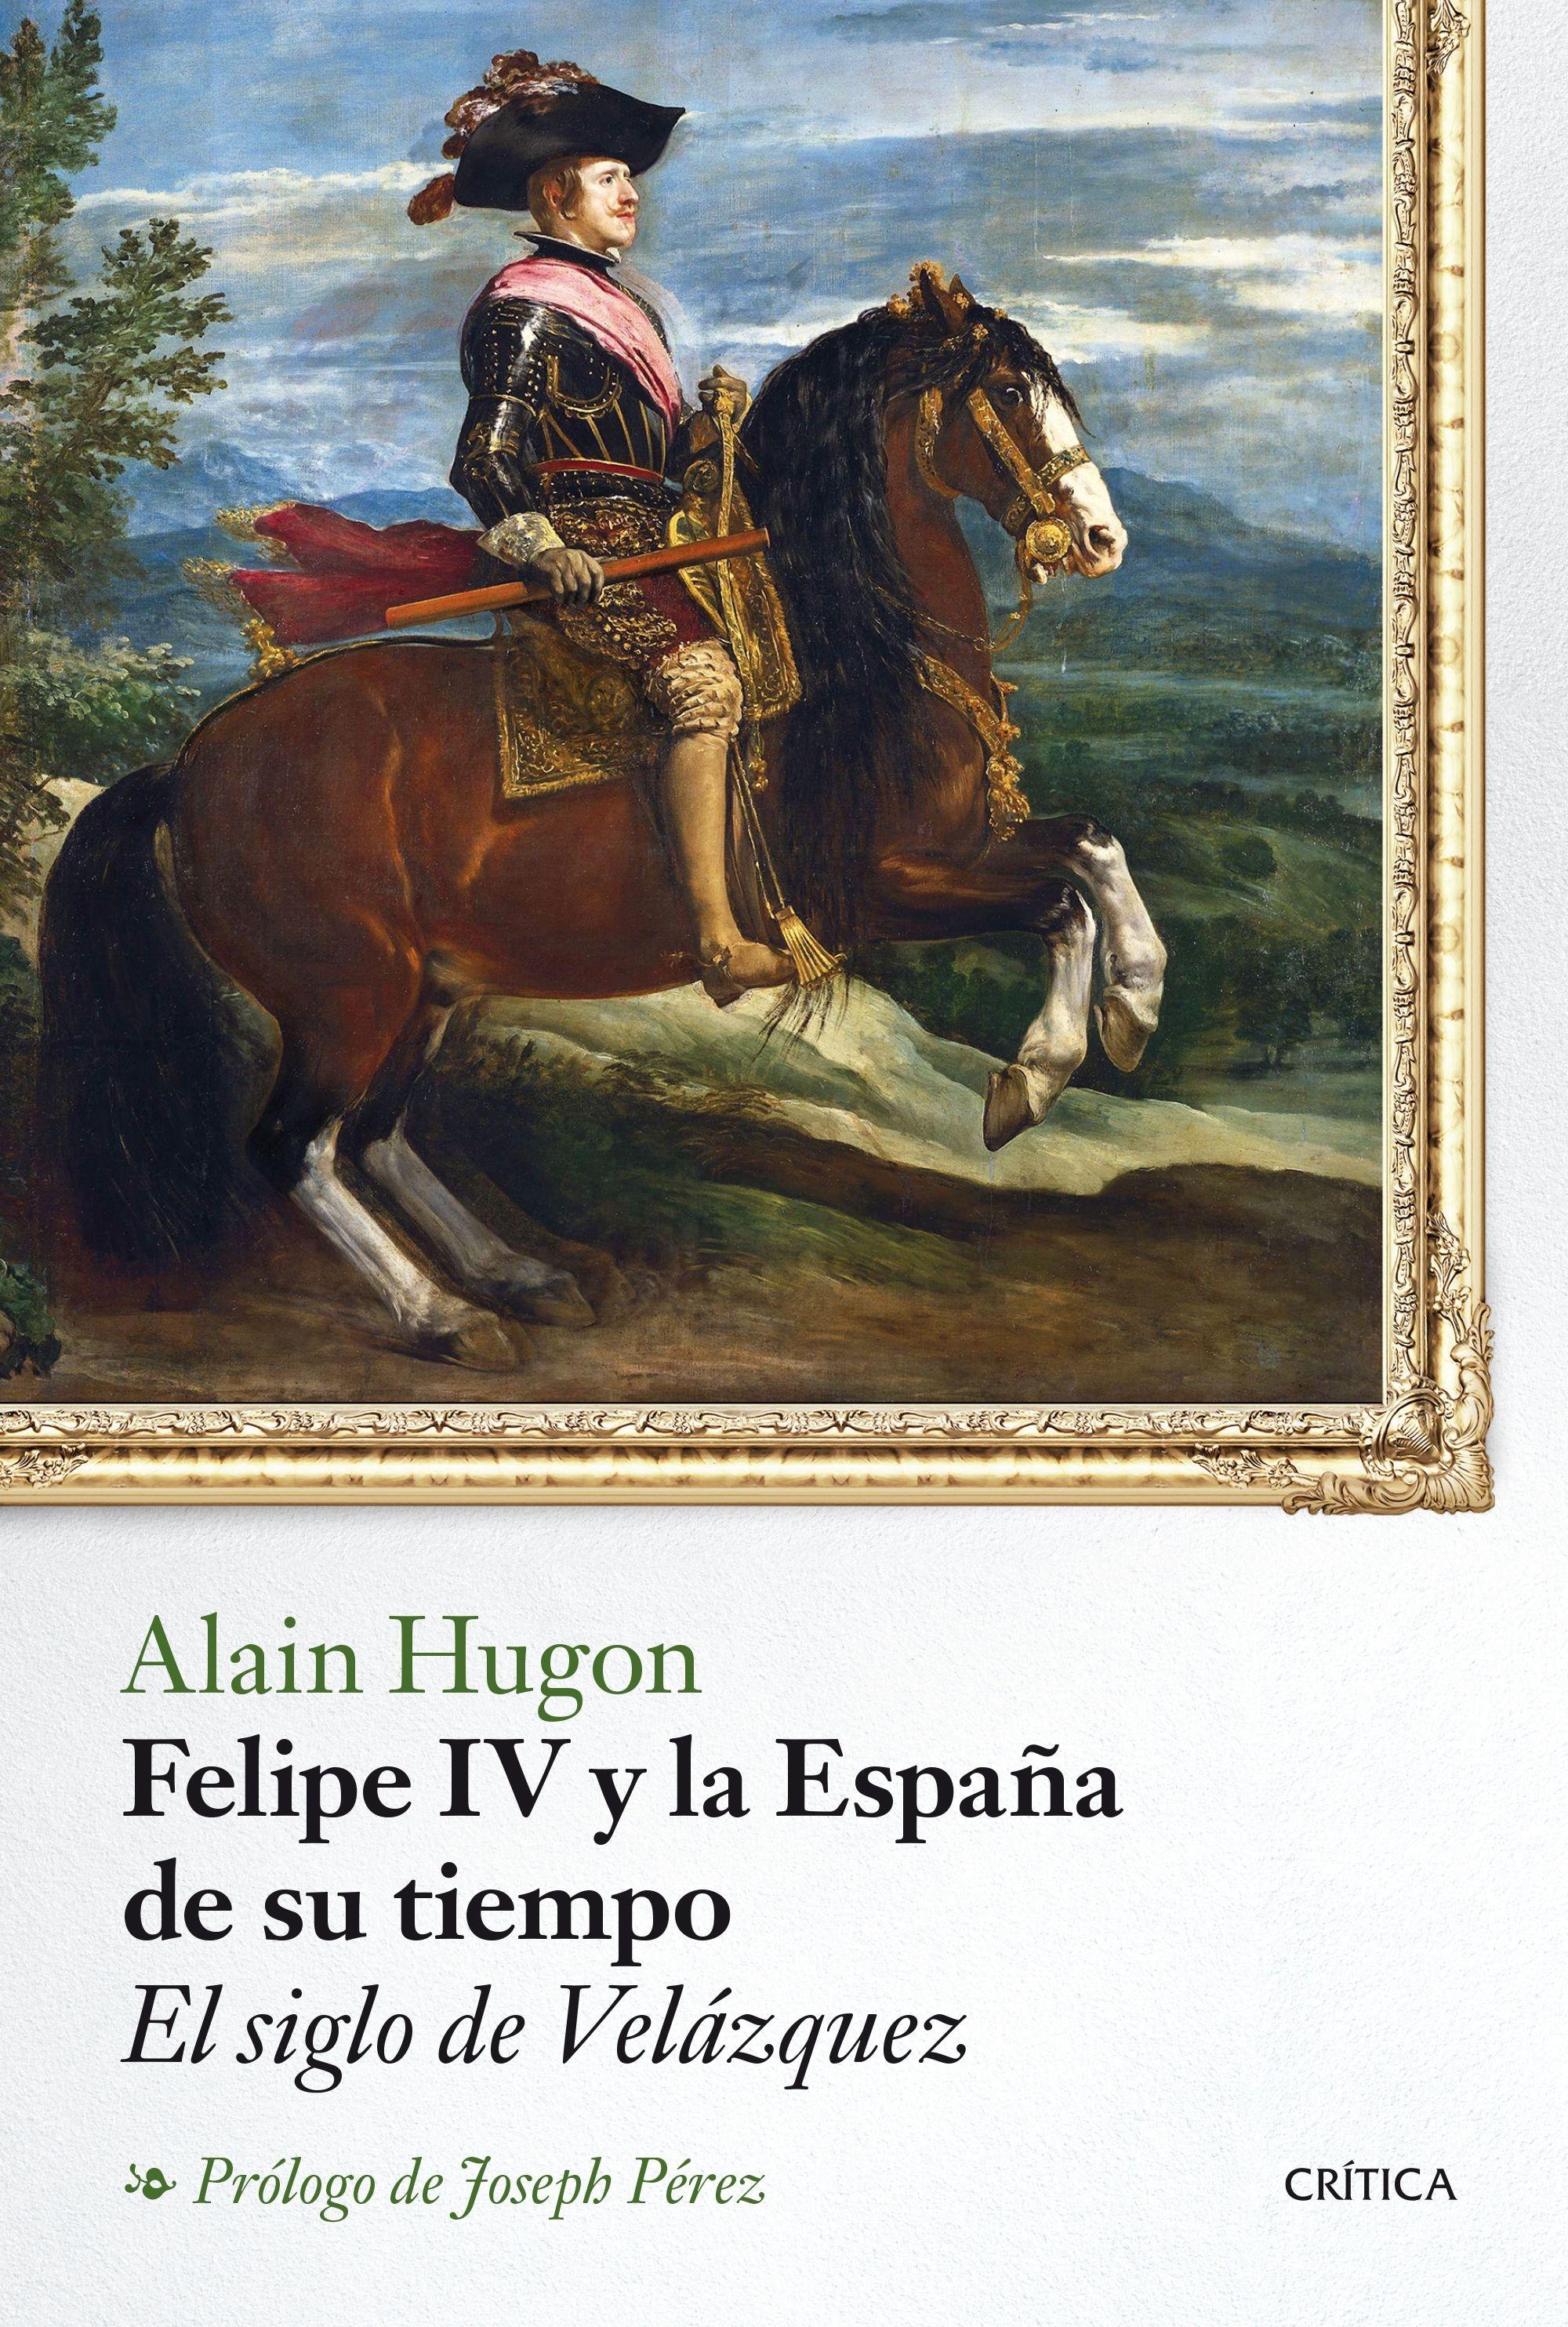 FELIPE IV "El siglo de Velázquez"